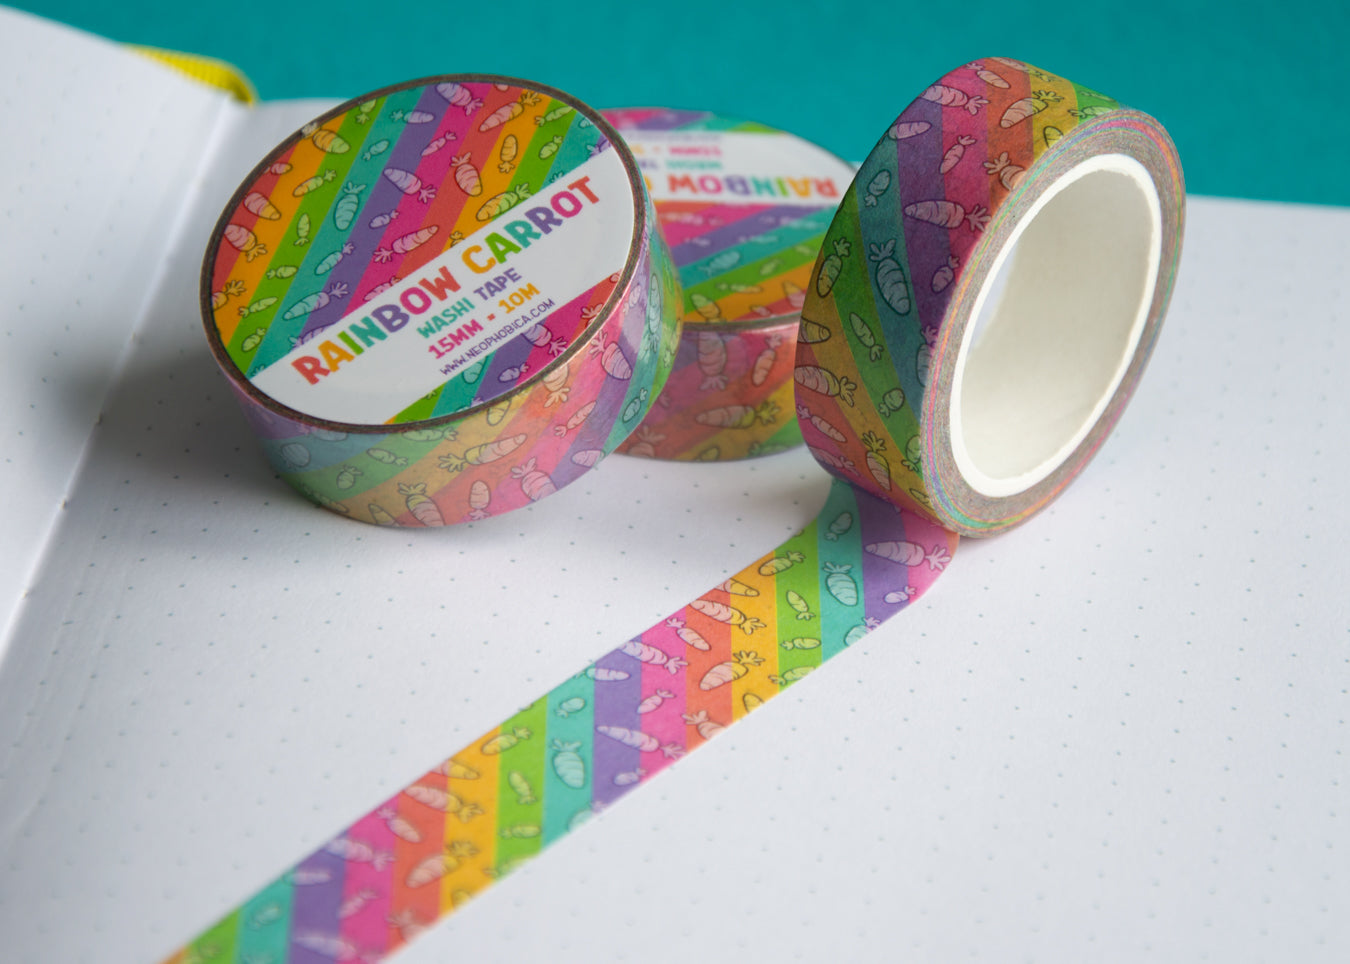 Rainbow Carrot - 15 mm Washi Tape